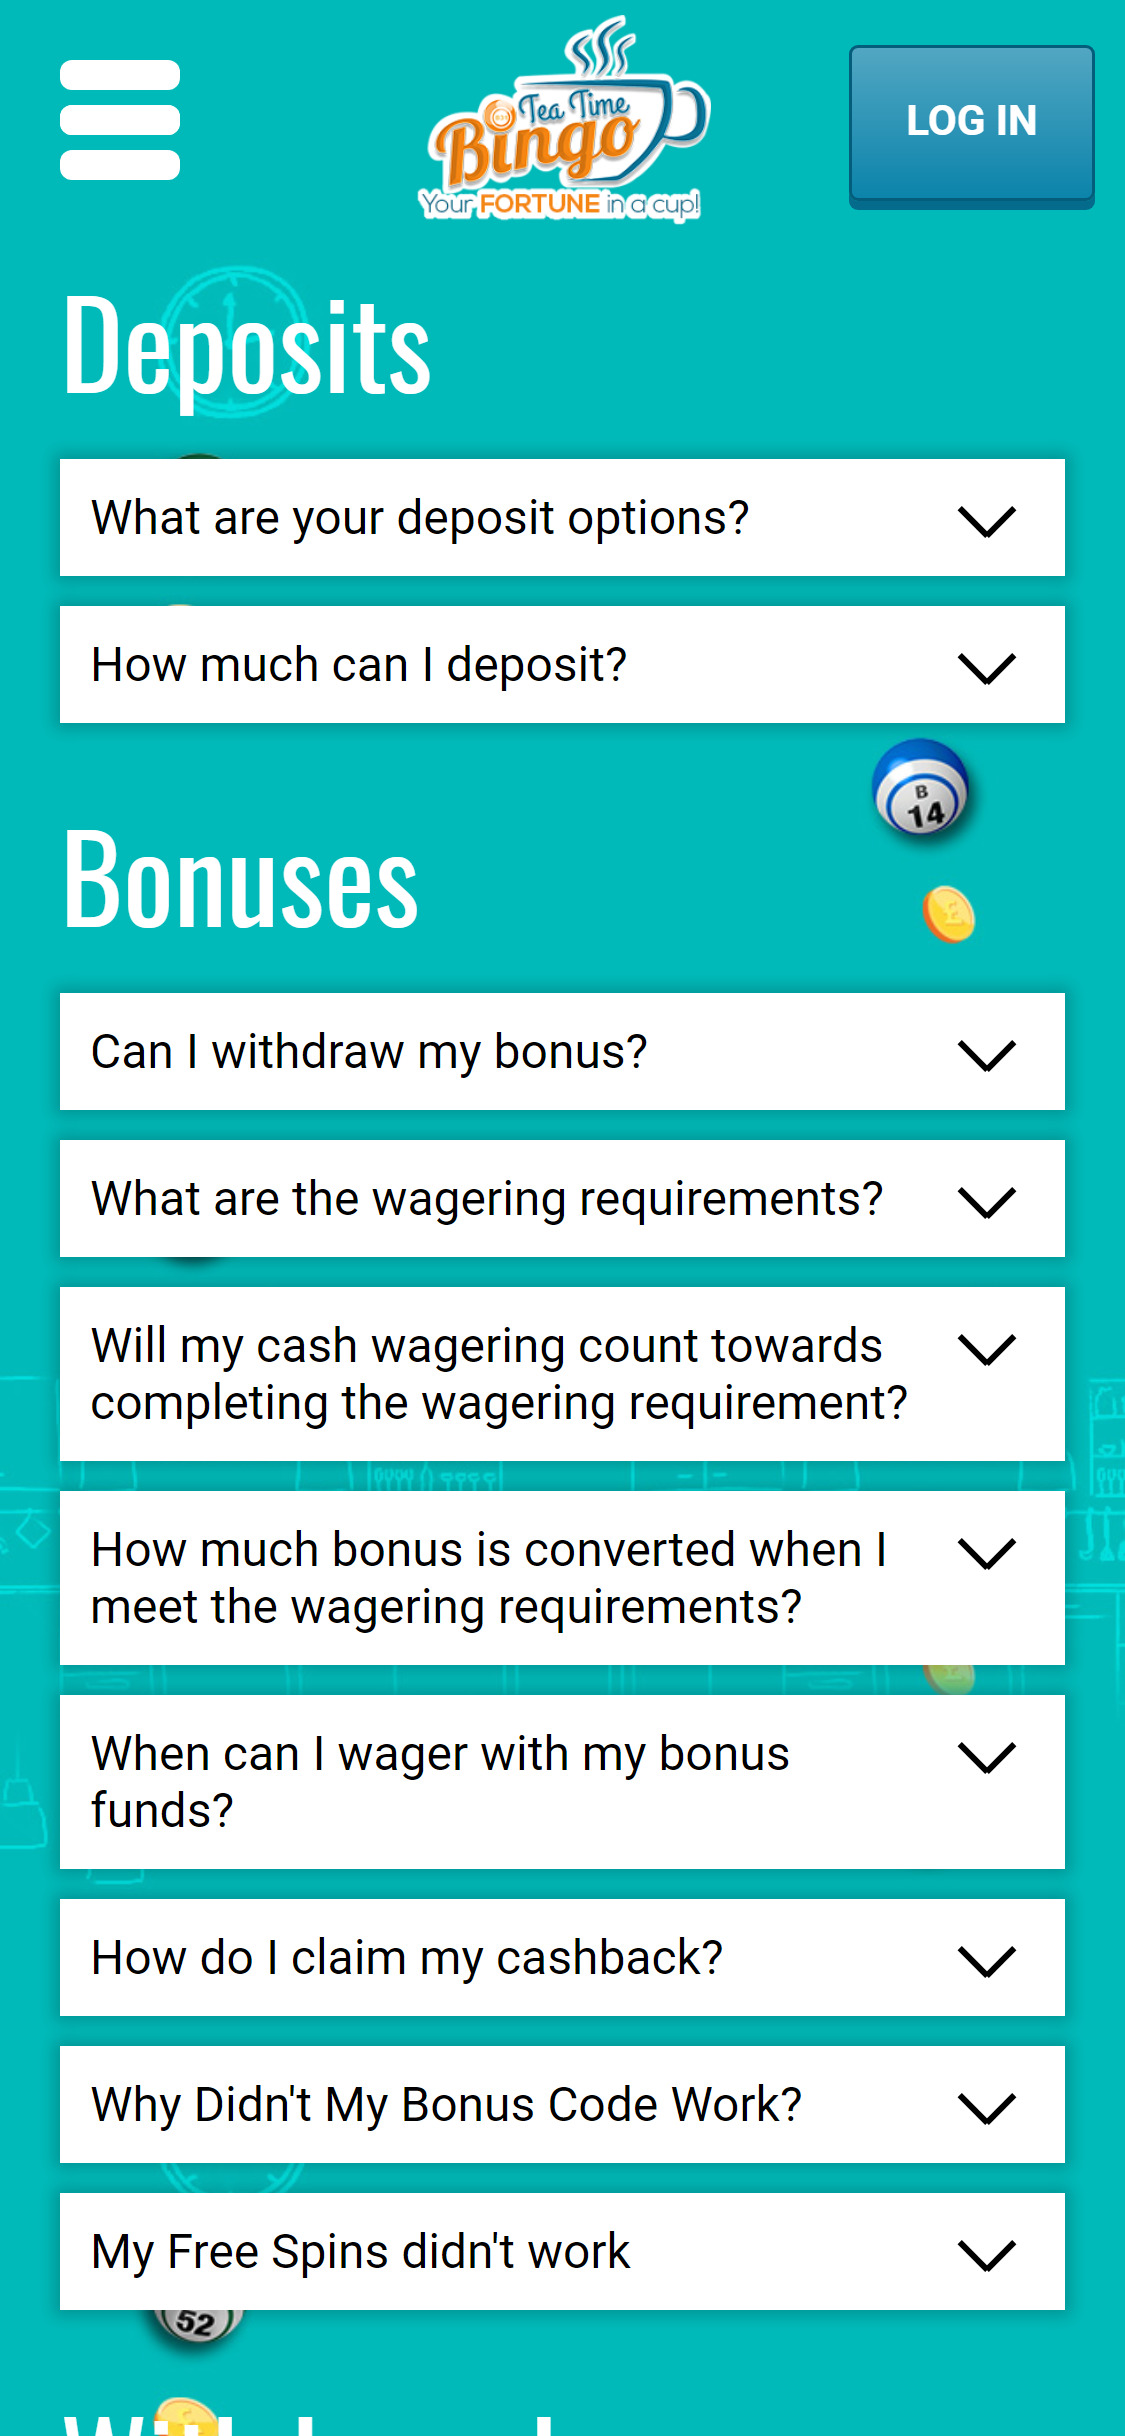 Tea Time Bingo Casino Mobile Payment Methods Review